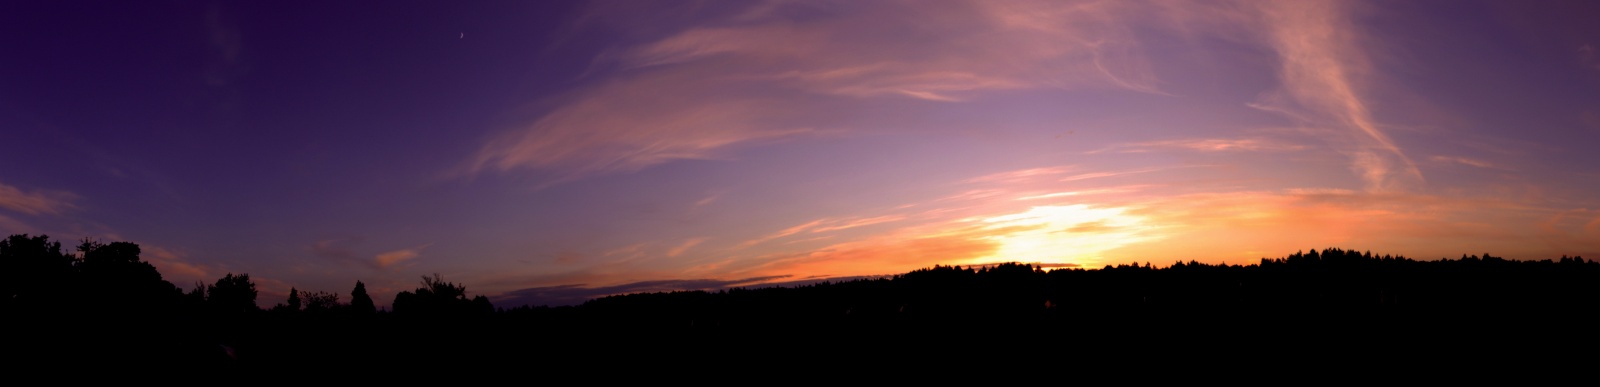 Закат панорама | Фотограф Антон Аржаник | foto.by фото.бай